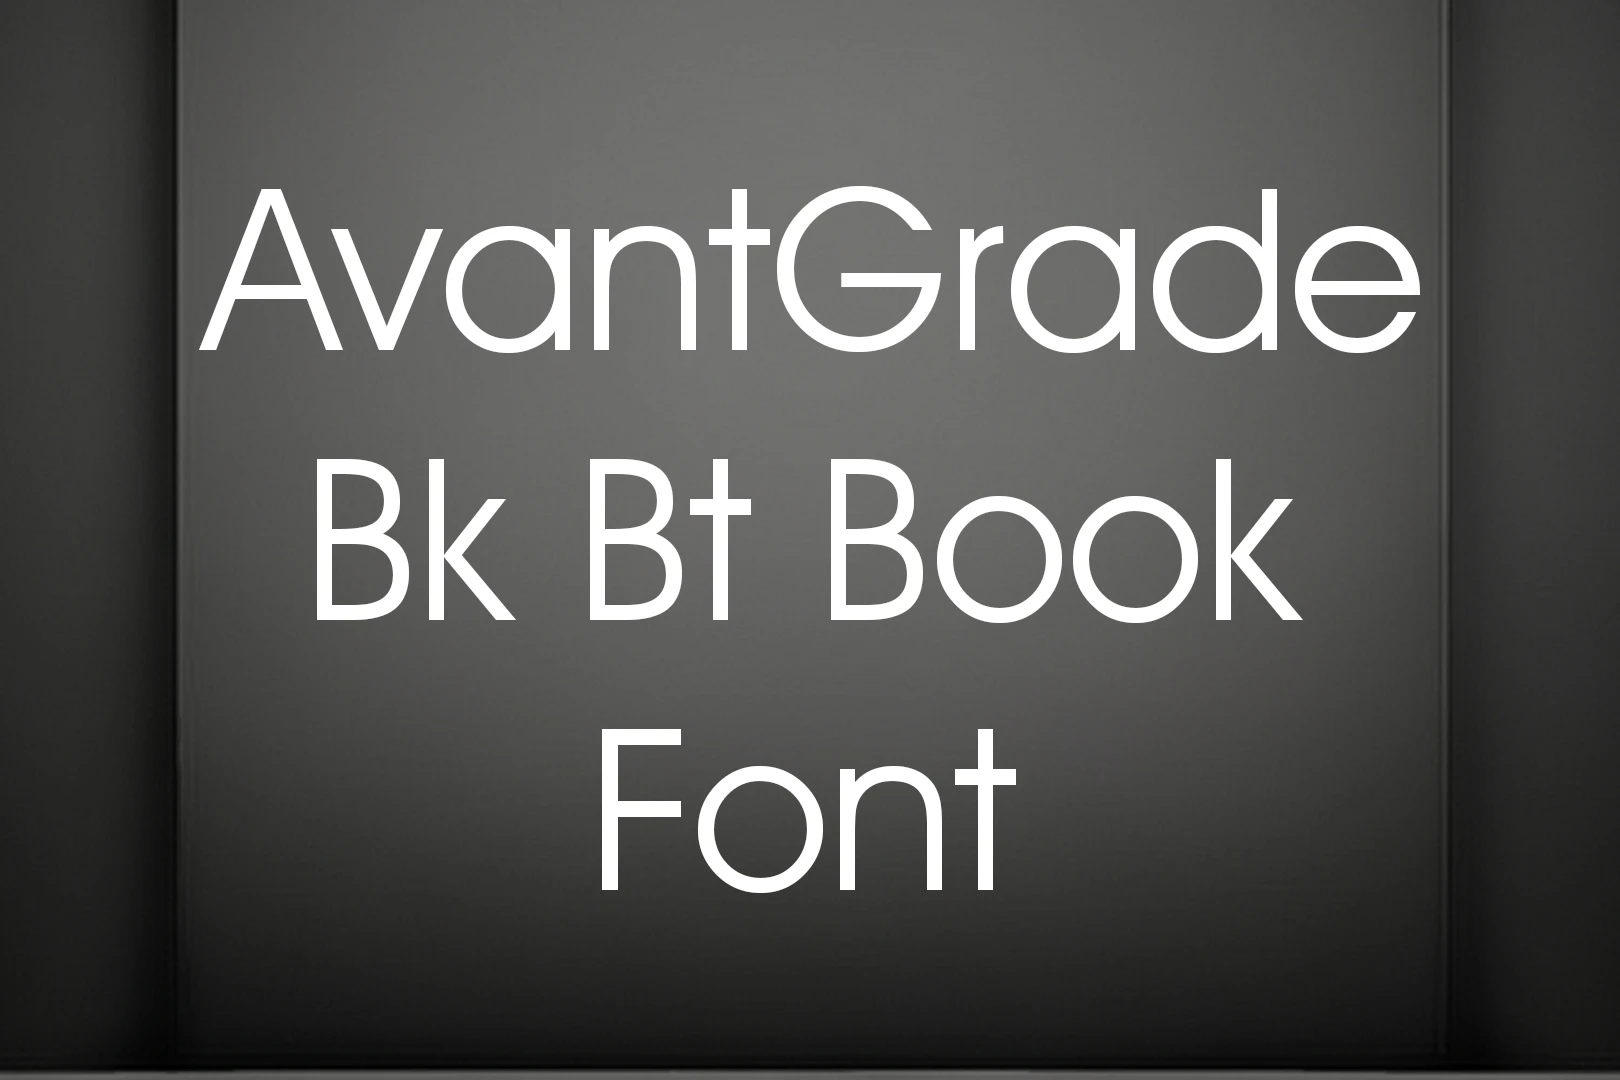 Avantgarde BK BT Book Font